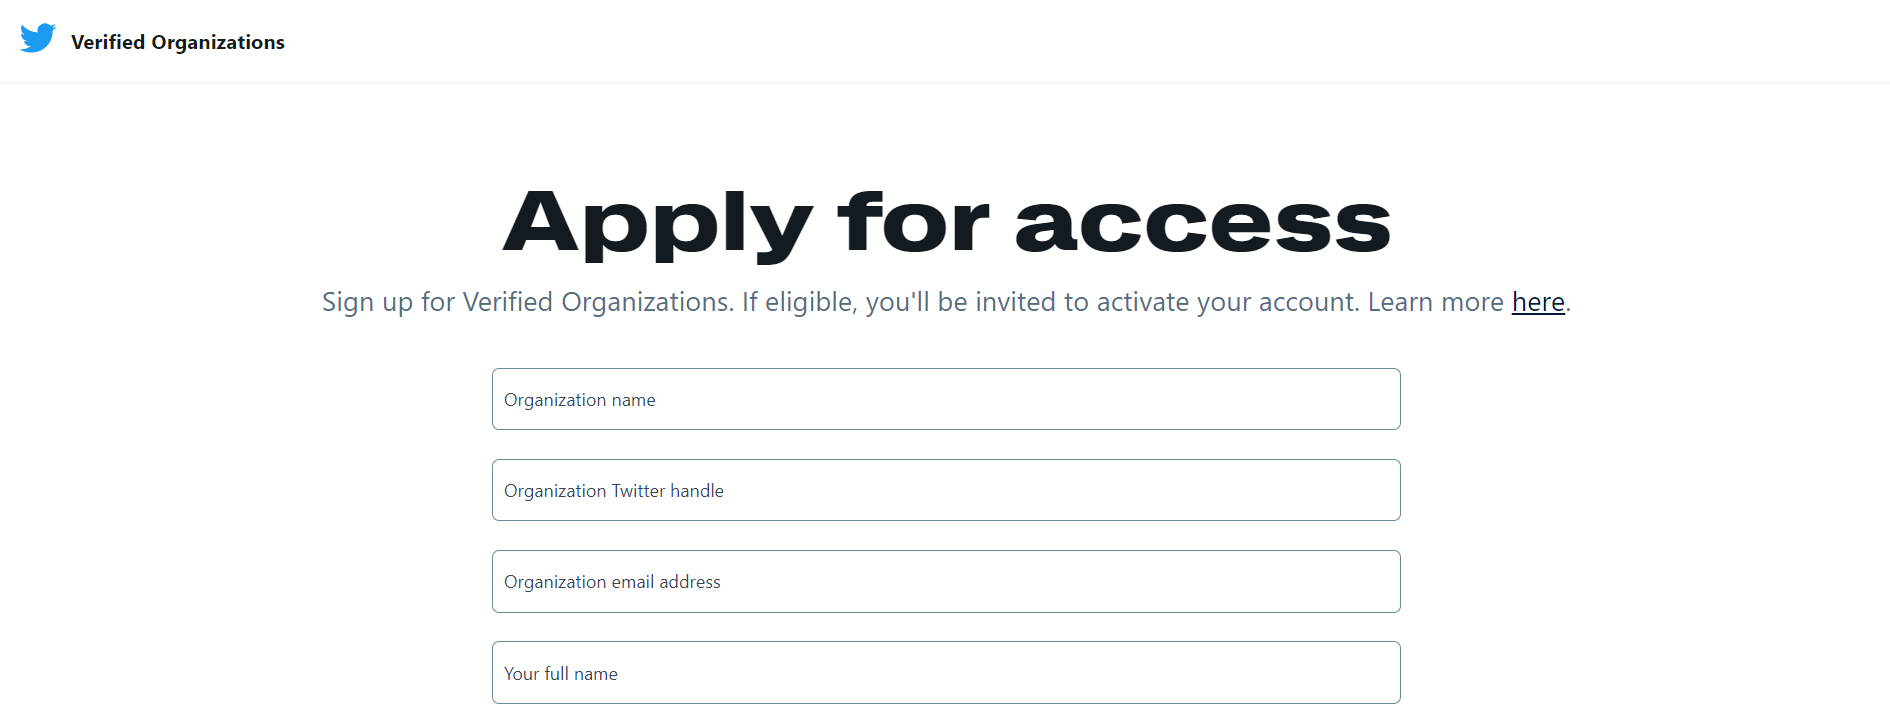 screenshot of Twitter verified organizations application page